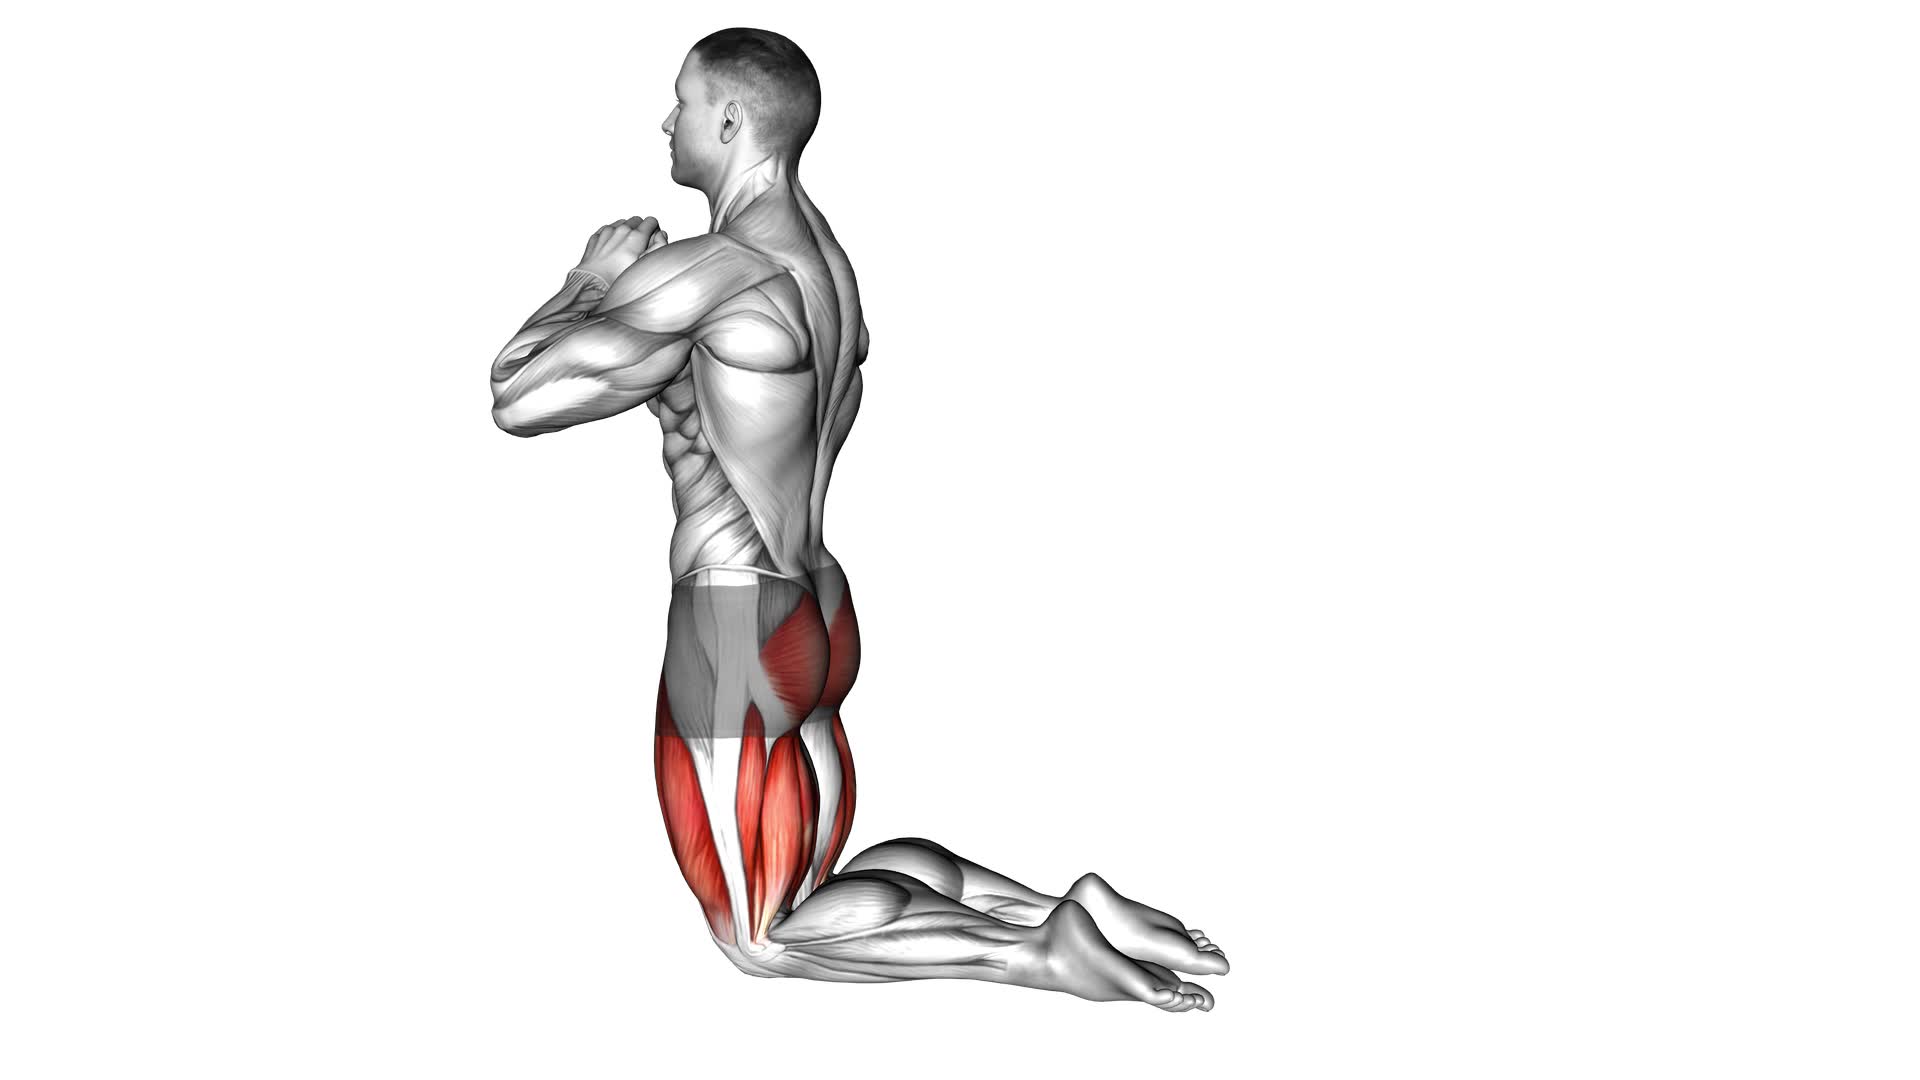 Kneeling Hip Thrust (male) - Video Exercise Guide & Tips